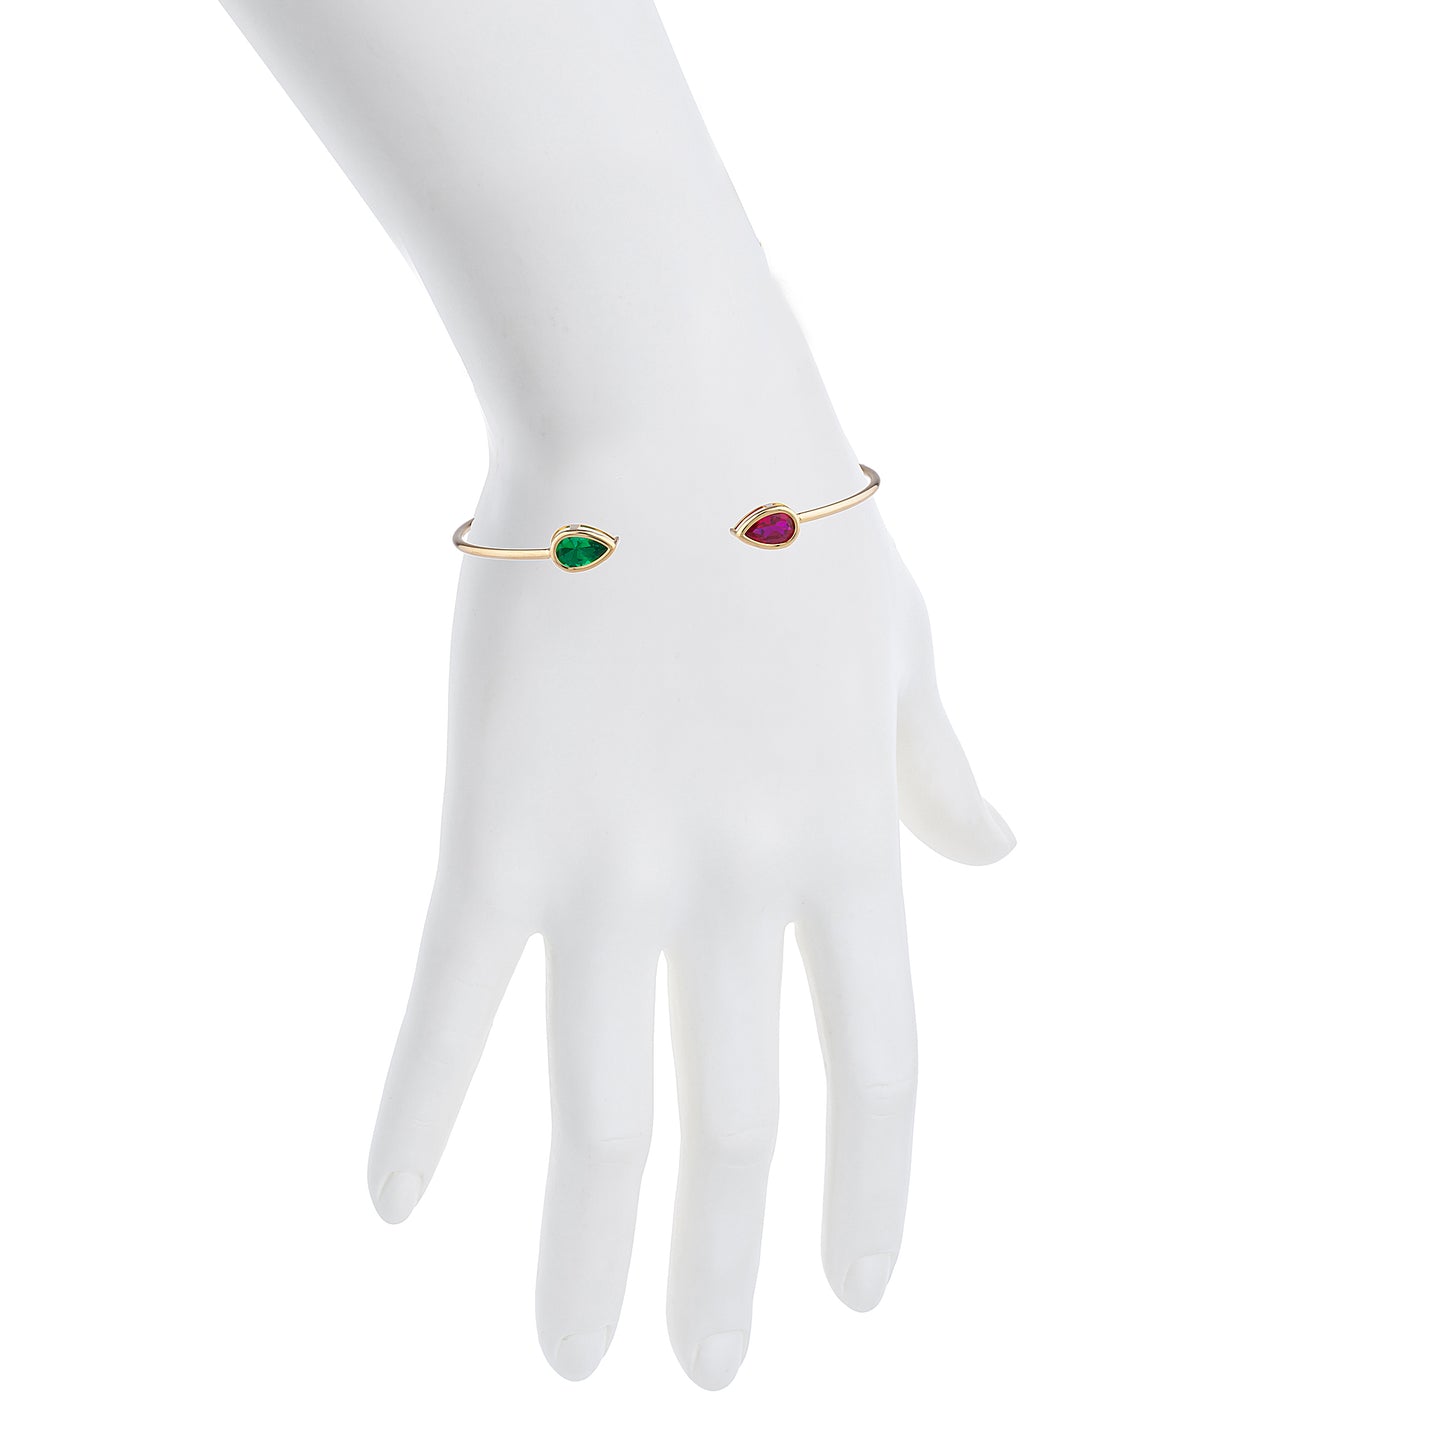 14Kt Gold Created Ruby & Emerald Pear Bezel Bangle Bracelet